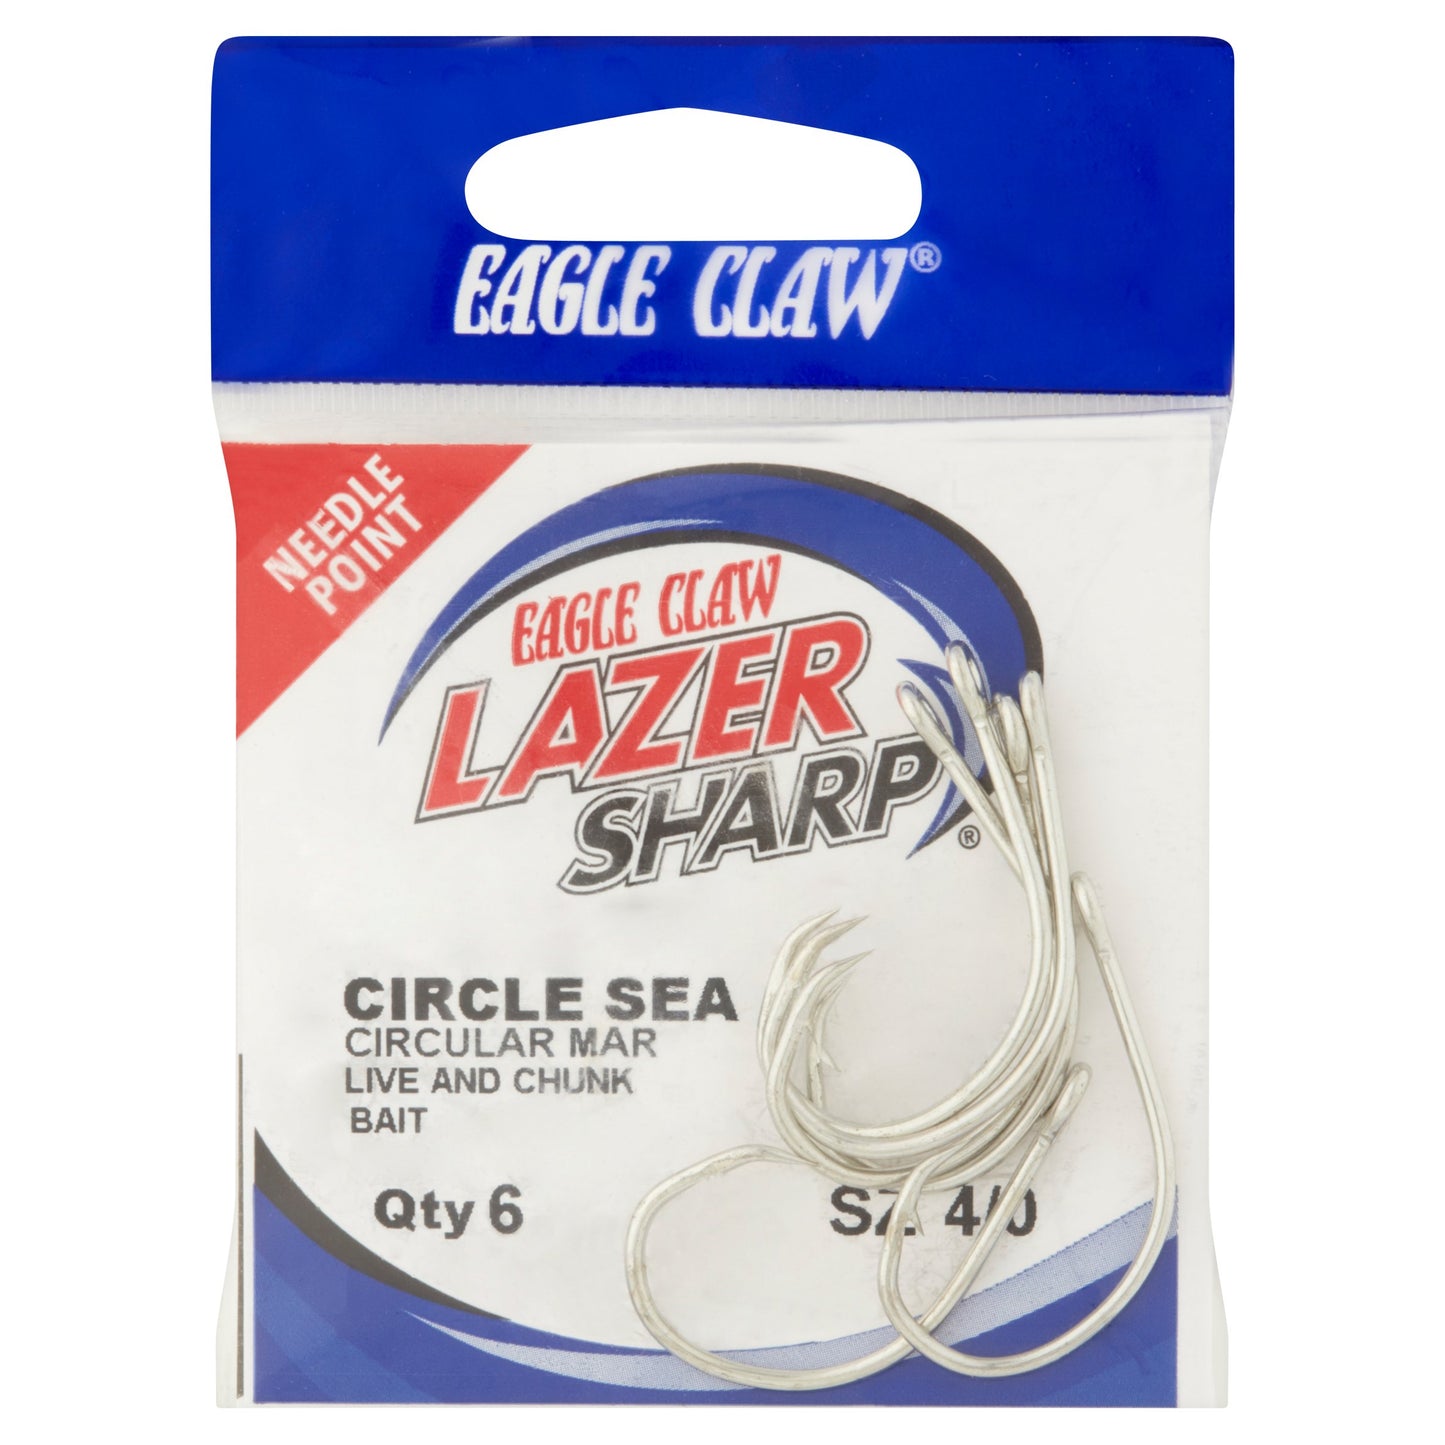 Eagle Claw Lazer Sharp Circle Sea Hooks